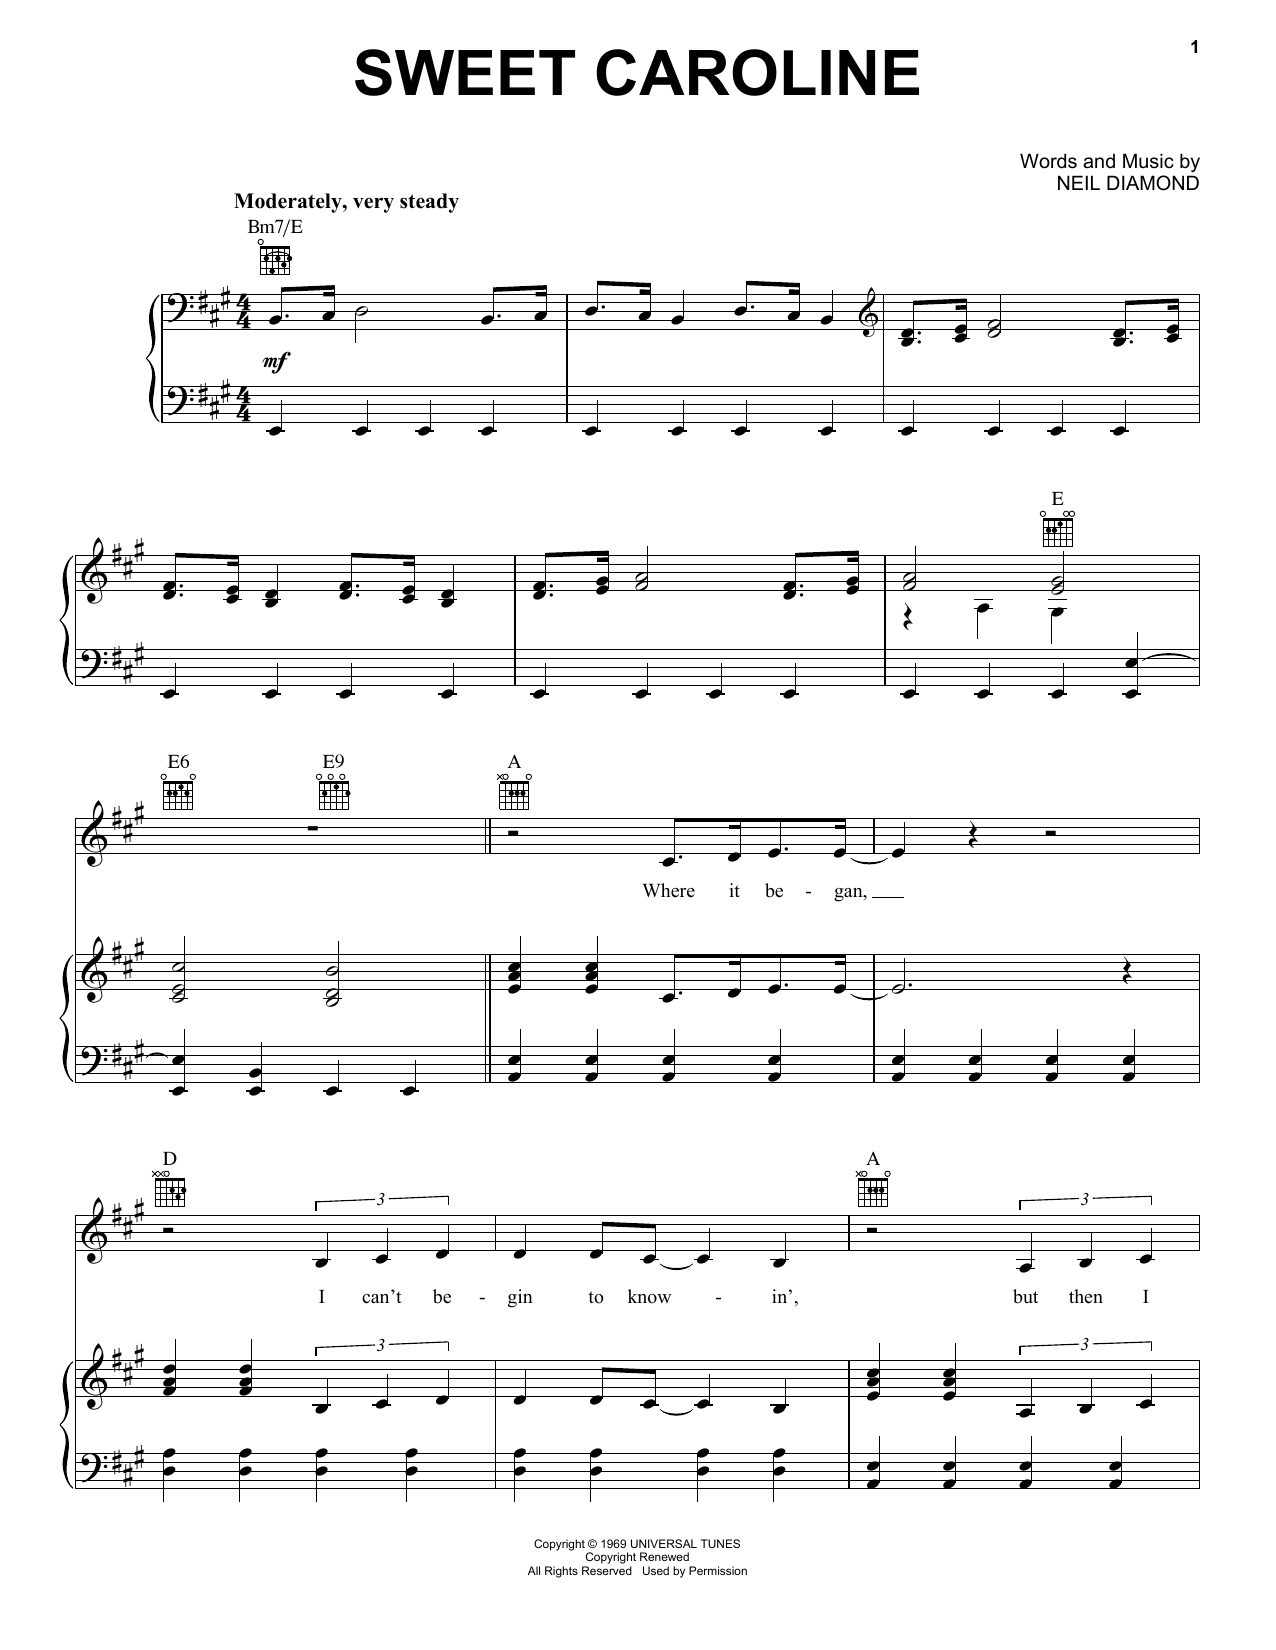 Neil Diamond Sweet Caroline Sheet Music Notes & Chords for Clarinet - Download or Print PDF